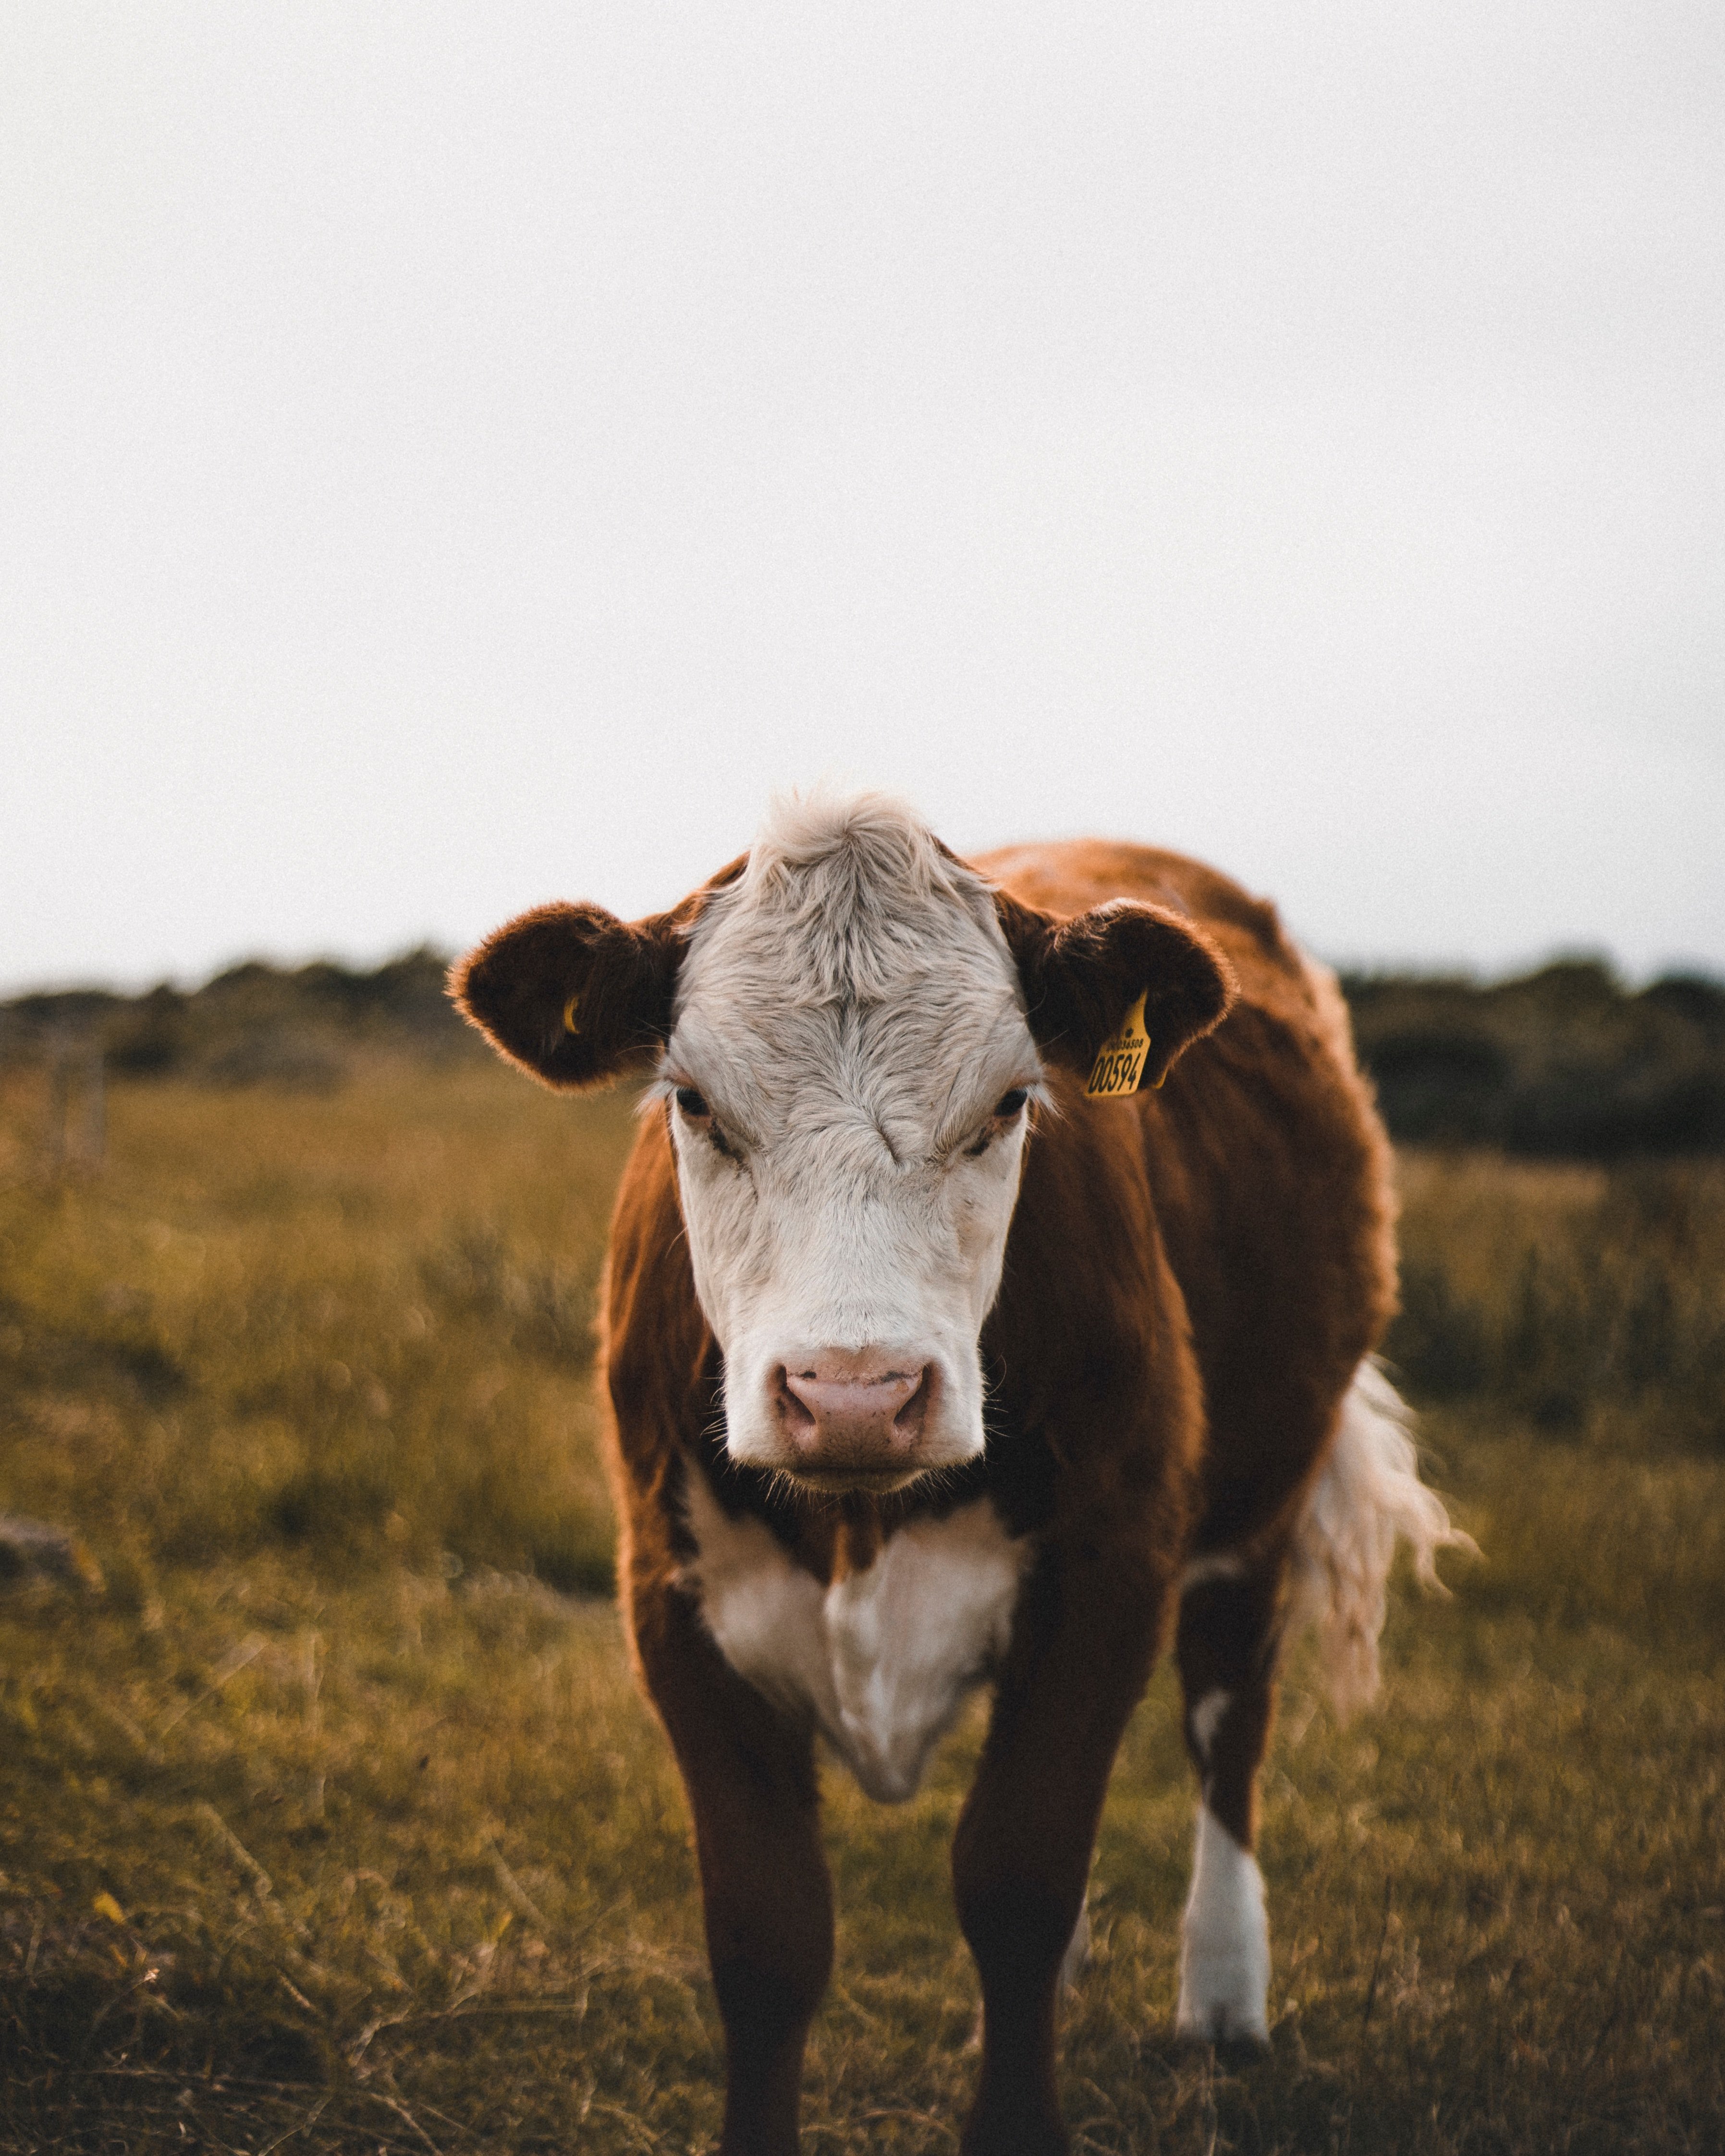 A cow grazing in a field | Source: Unsplash.com